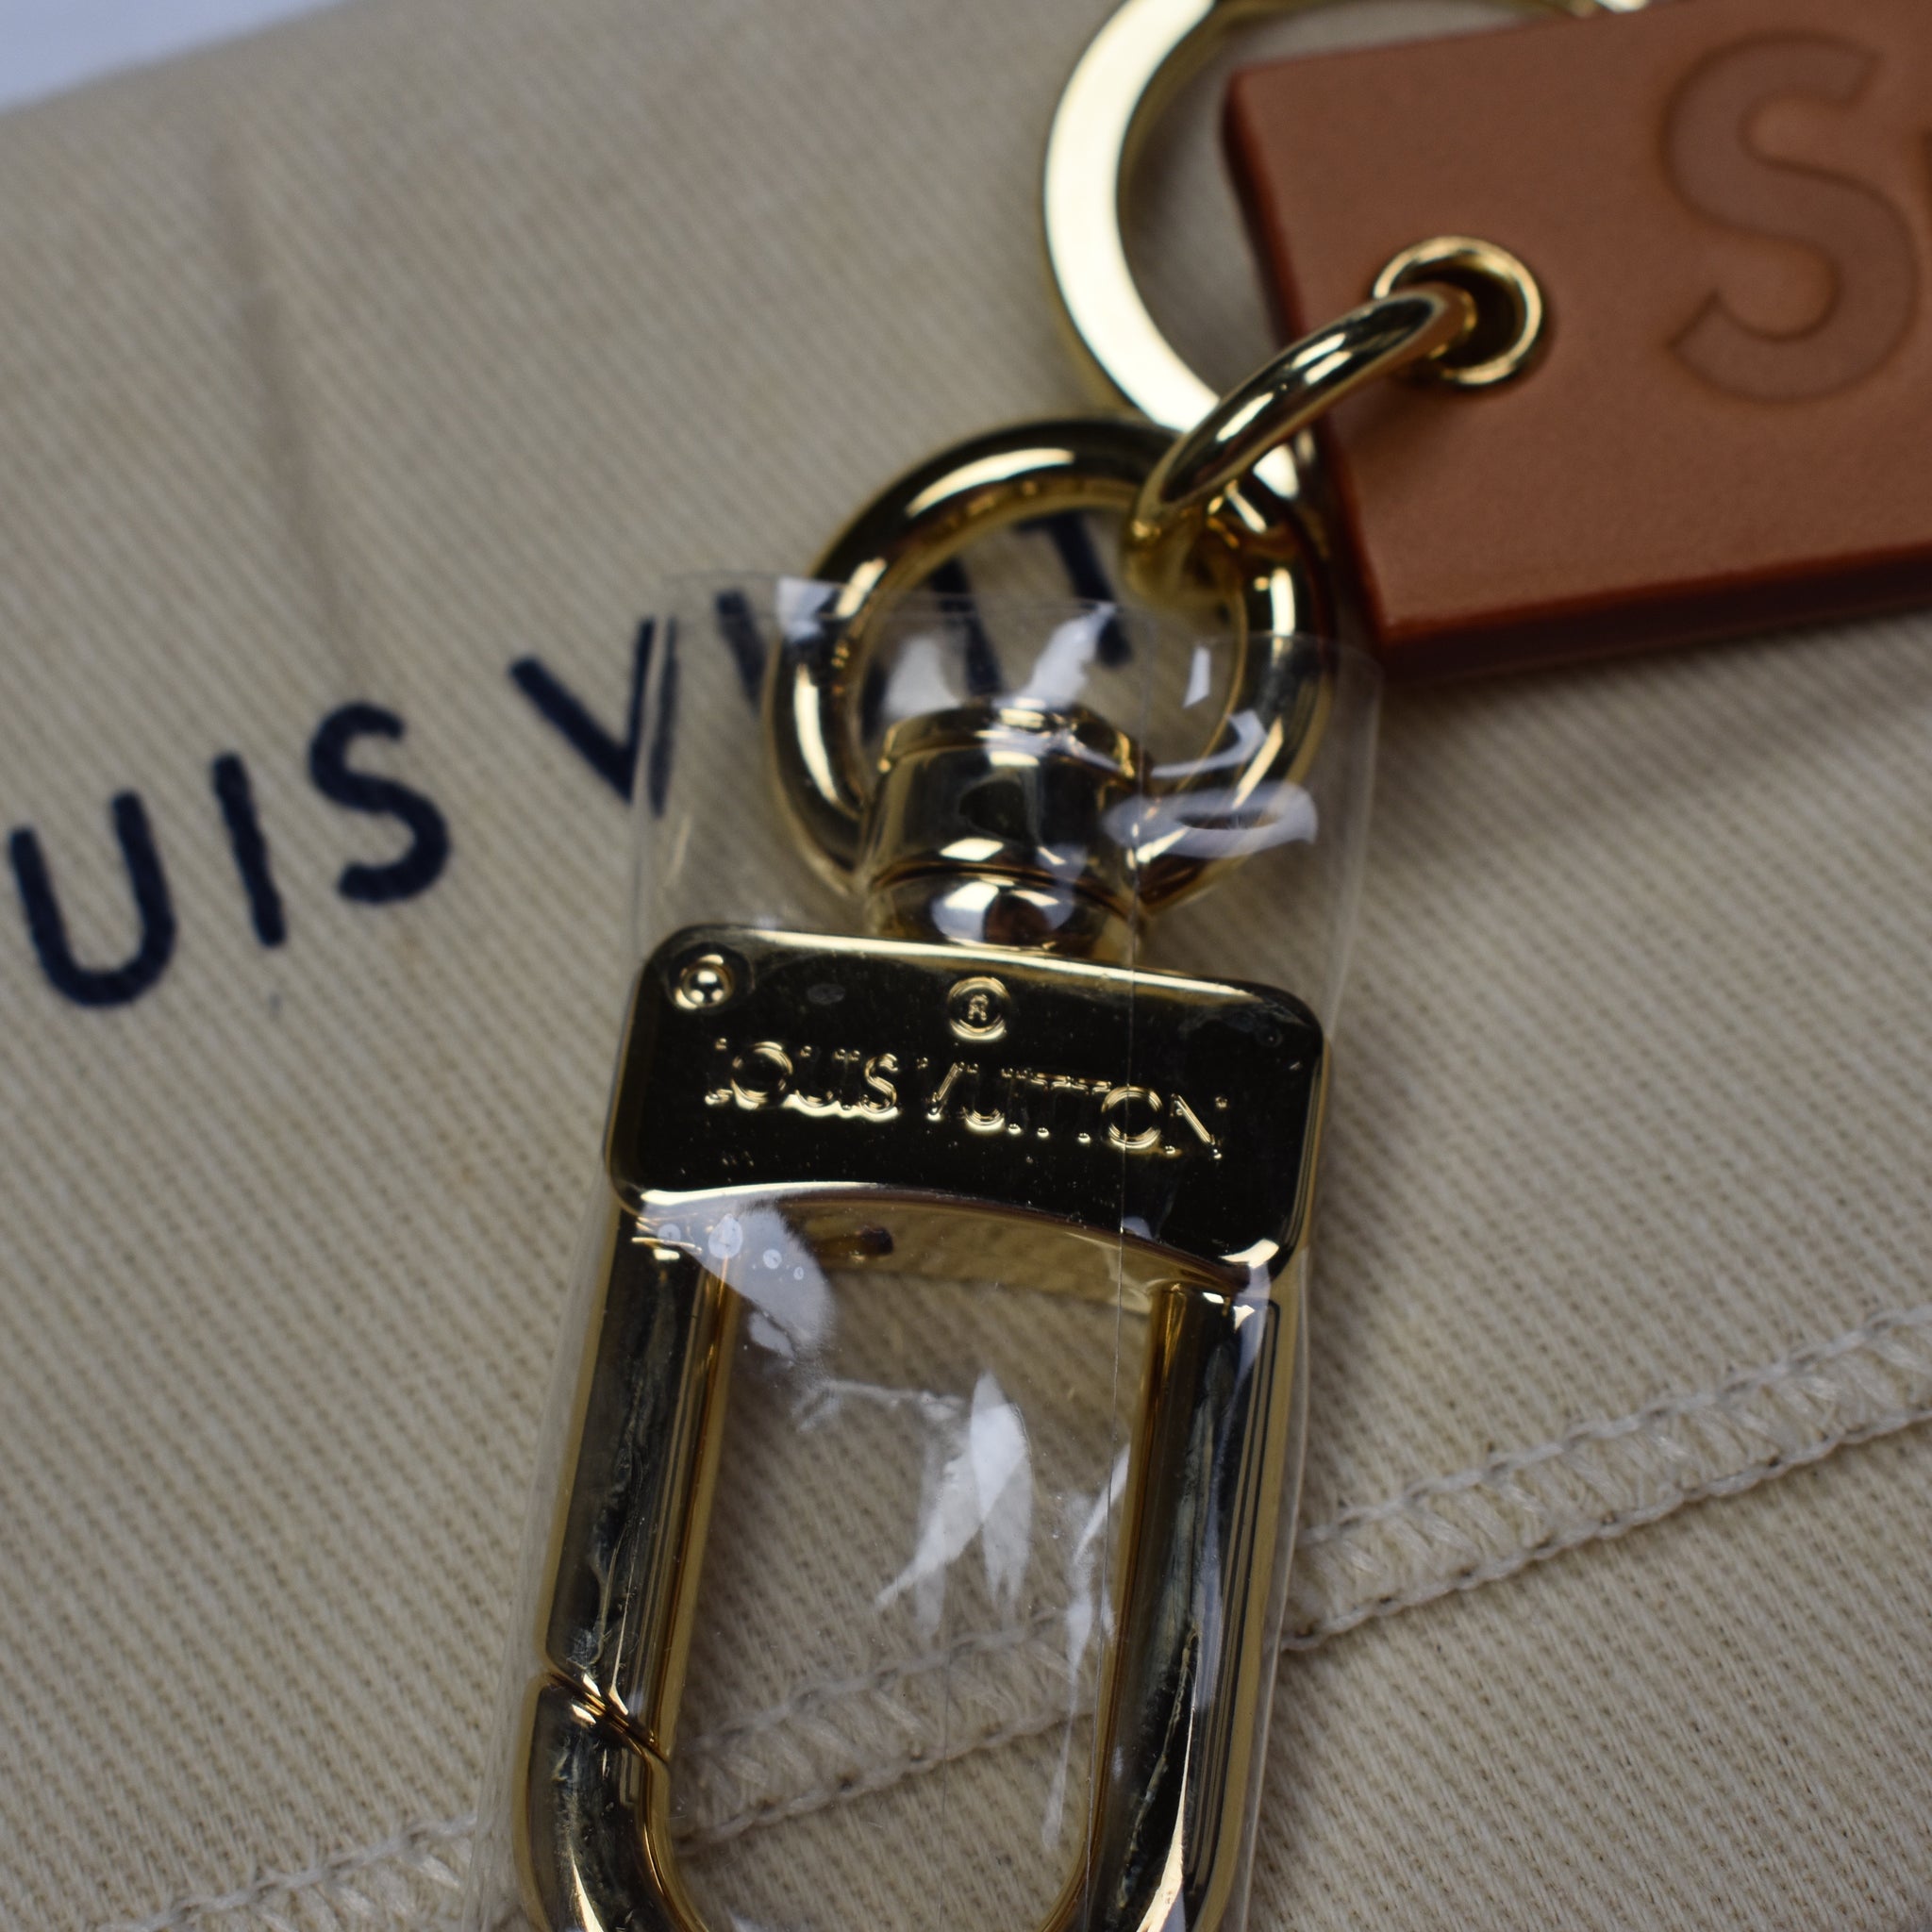 Supreme x Louis Vuitton Key Investment Items